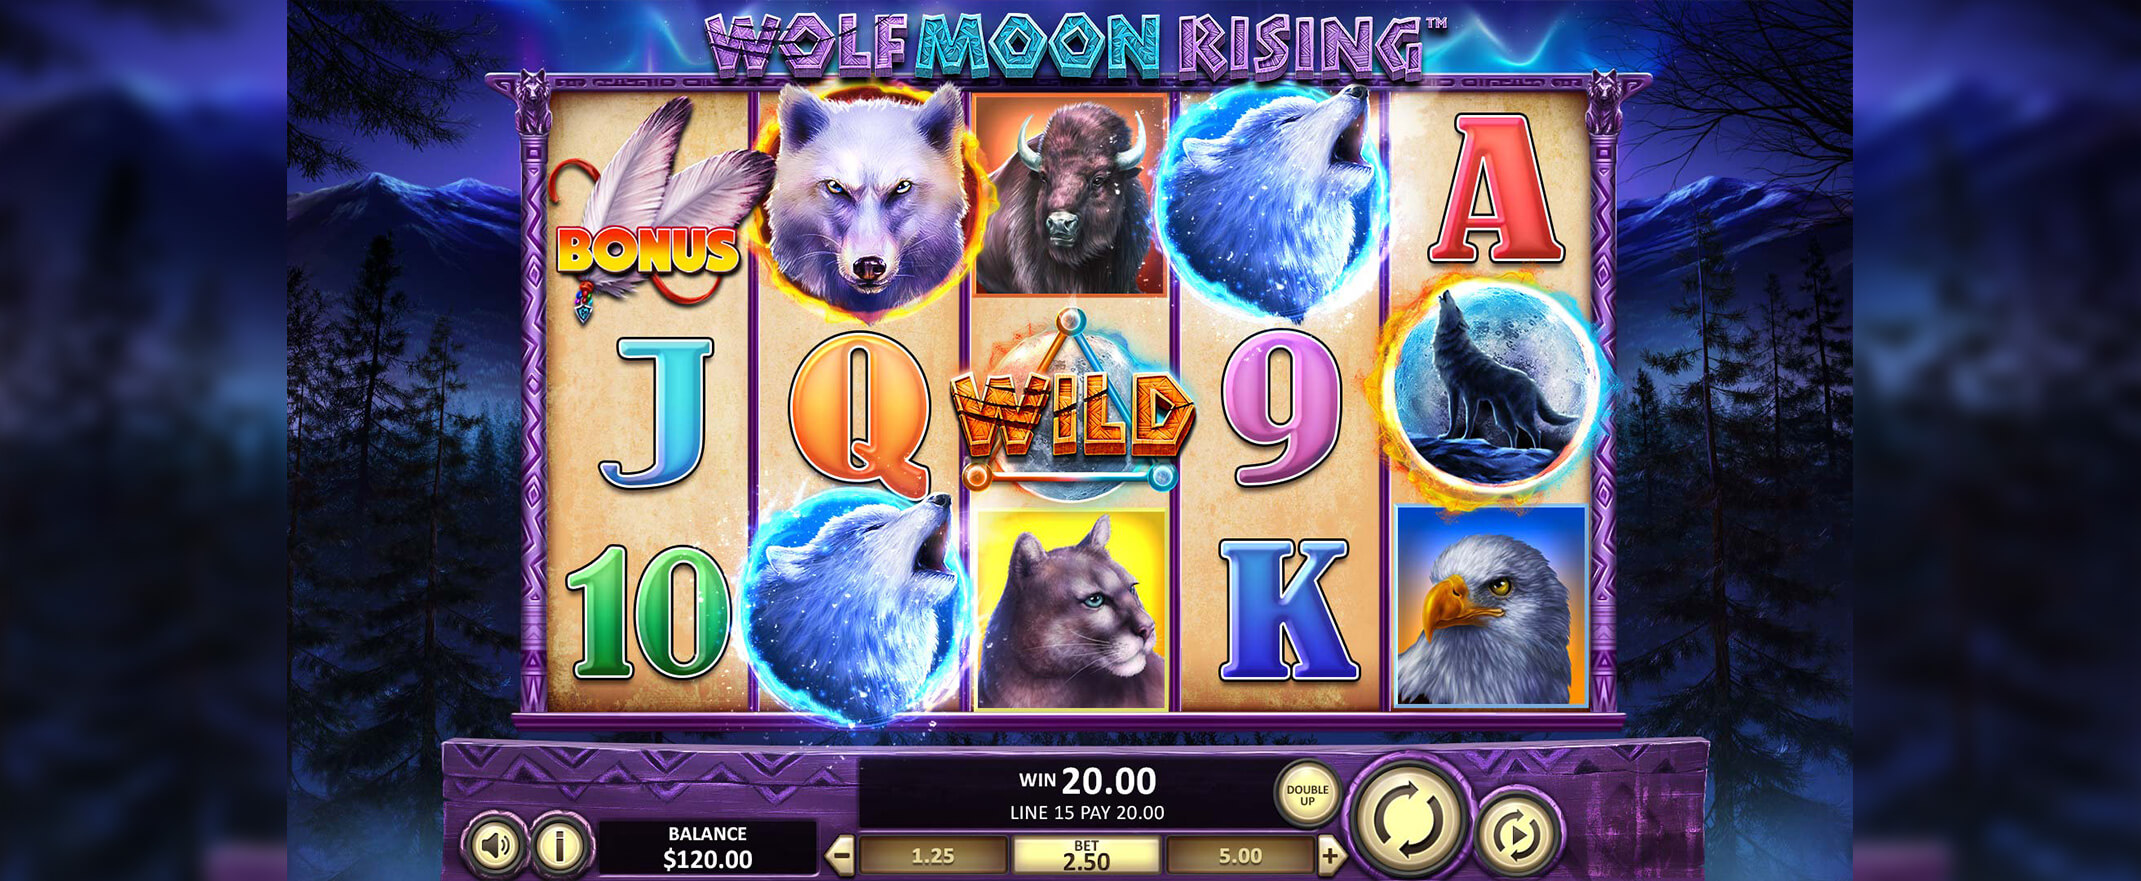 Wolf Moon Rising peliautomaatti Betsoftilta